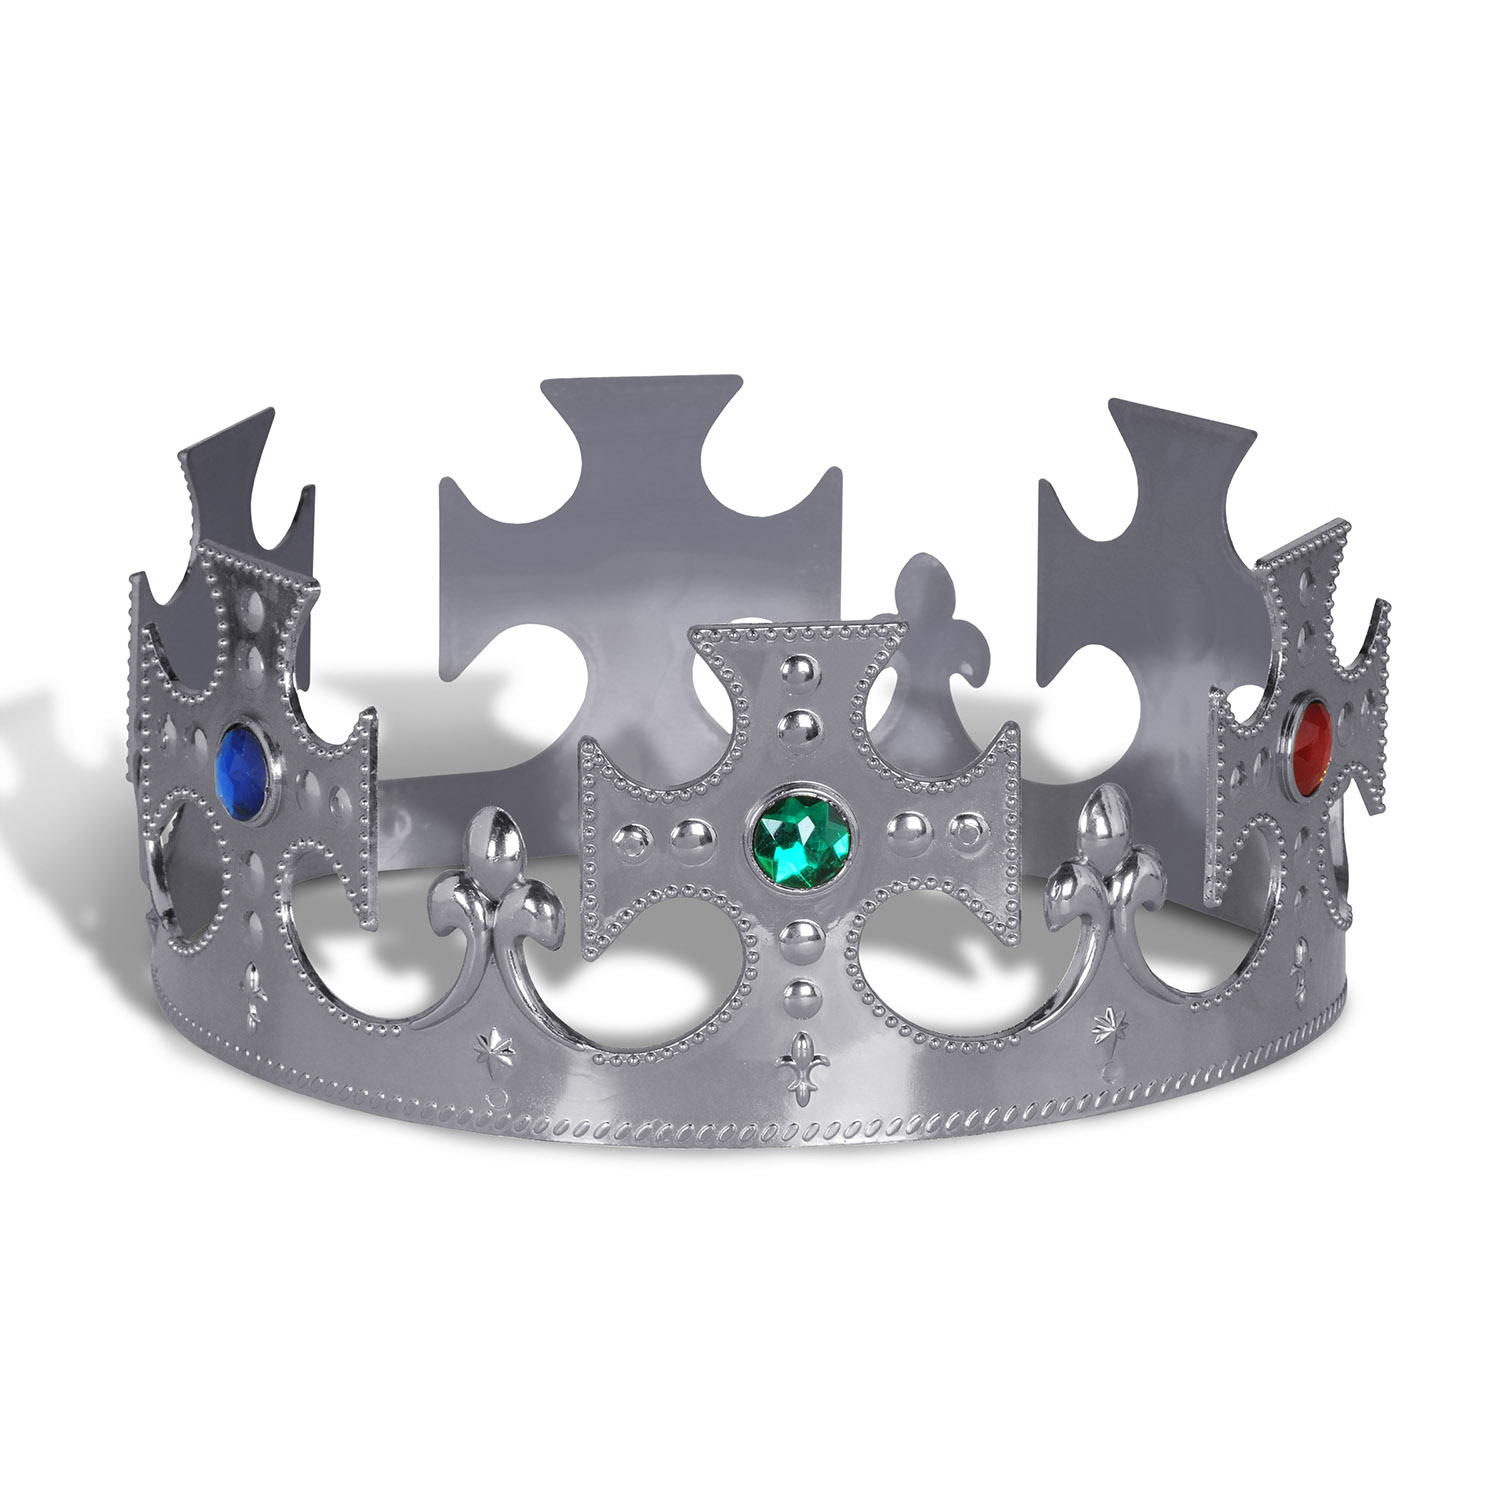 12 Wholesale Plastic Jeweled King's Crown